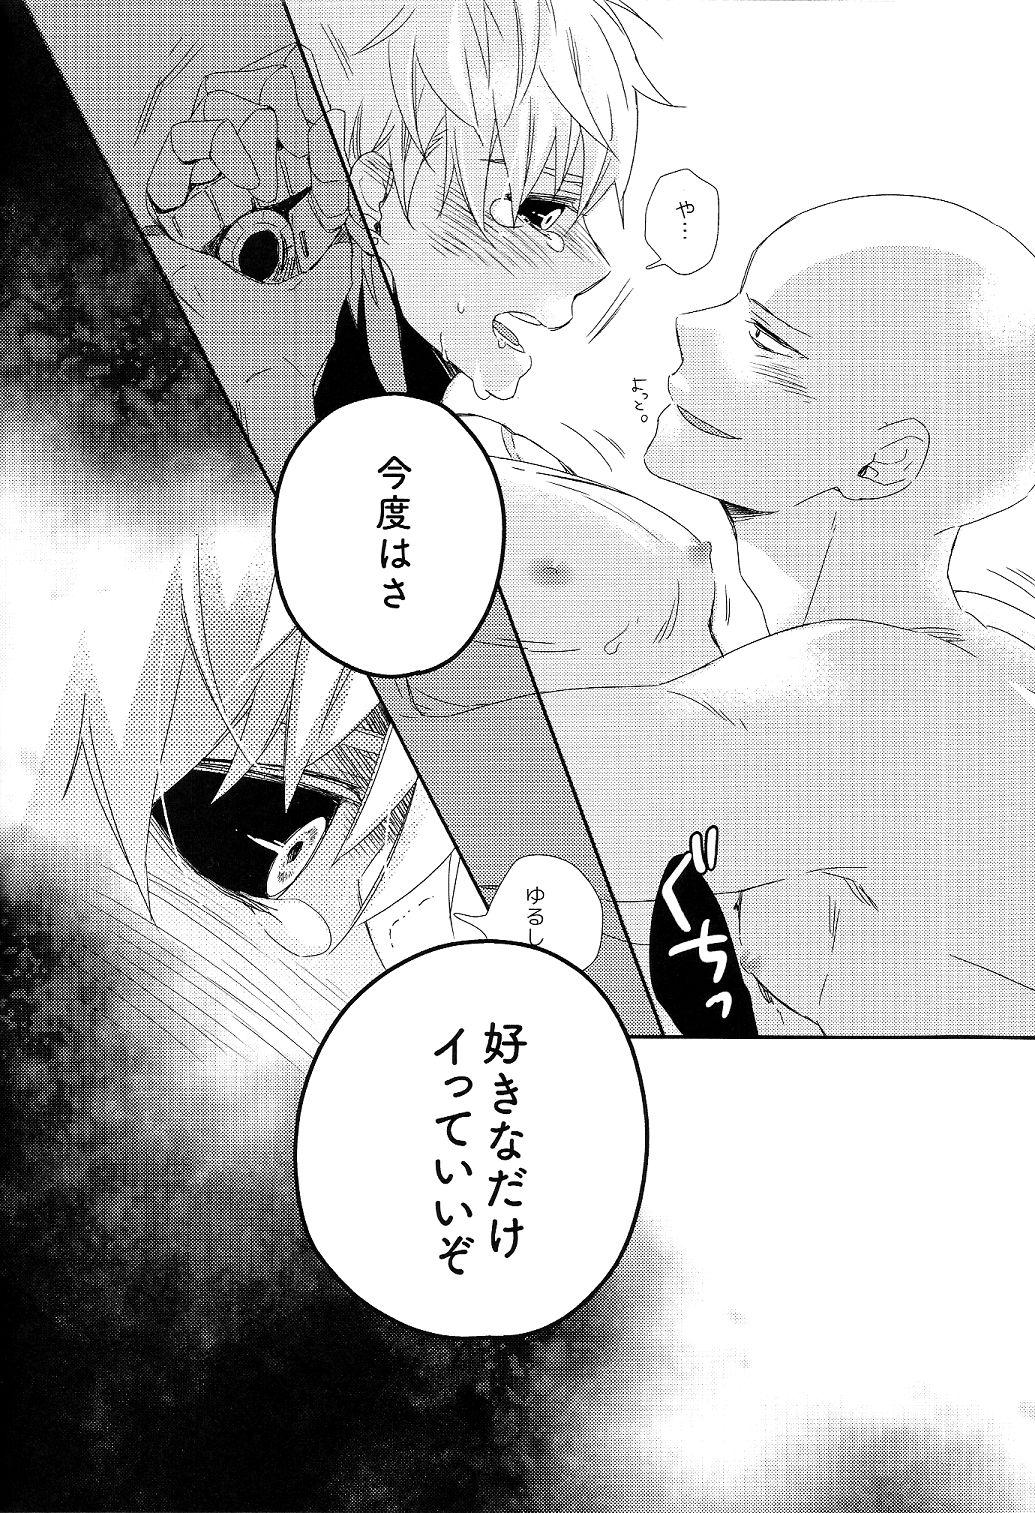 Punk Sensei no xxx ga xx Sugite Tsurai. - One punch man Topless - Page 27